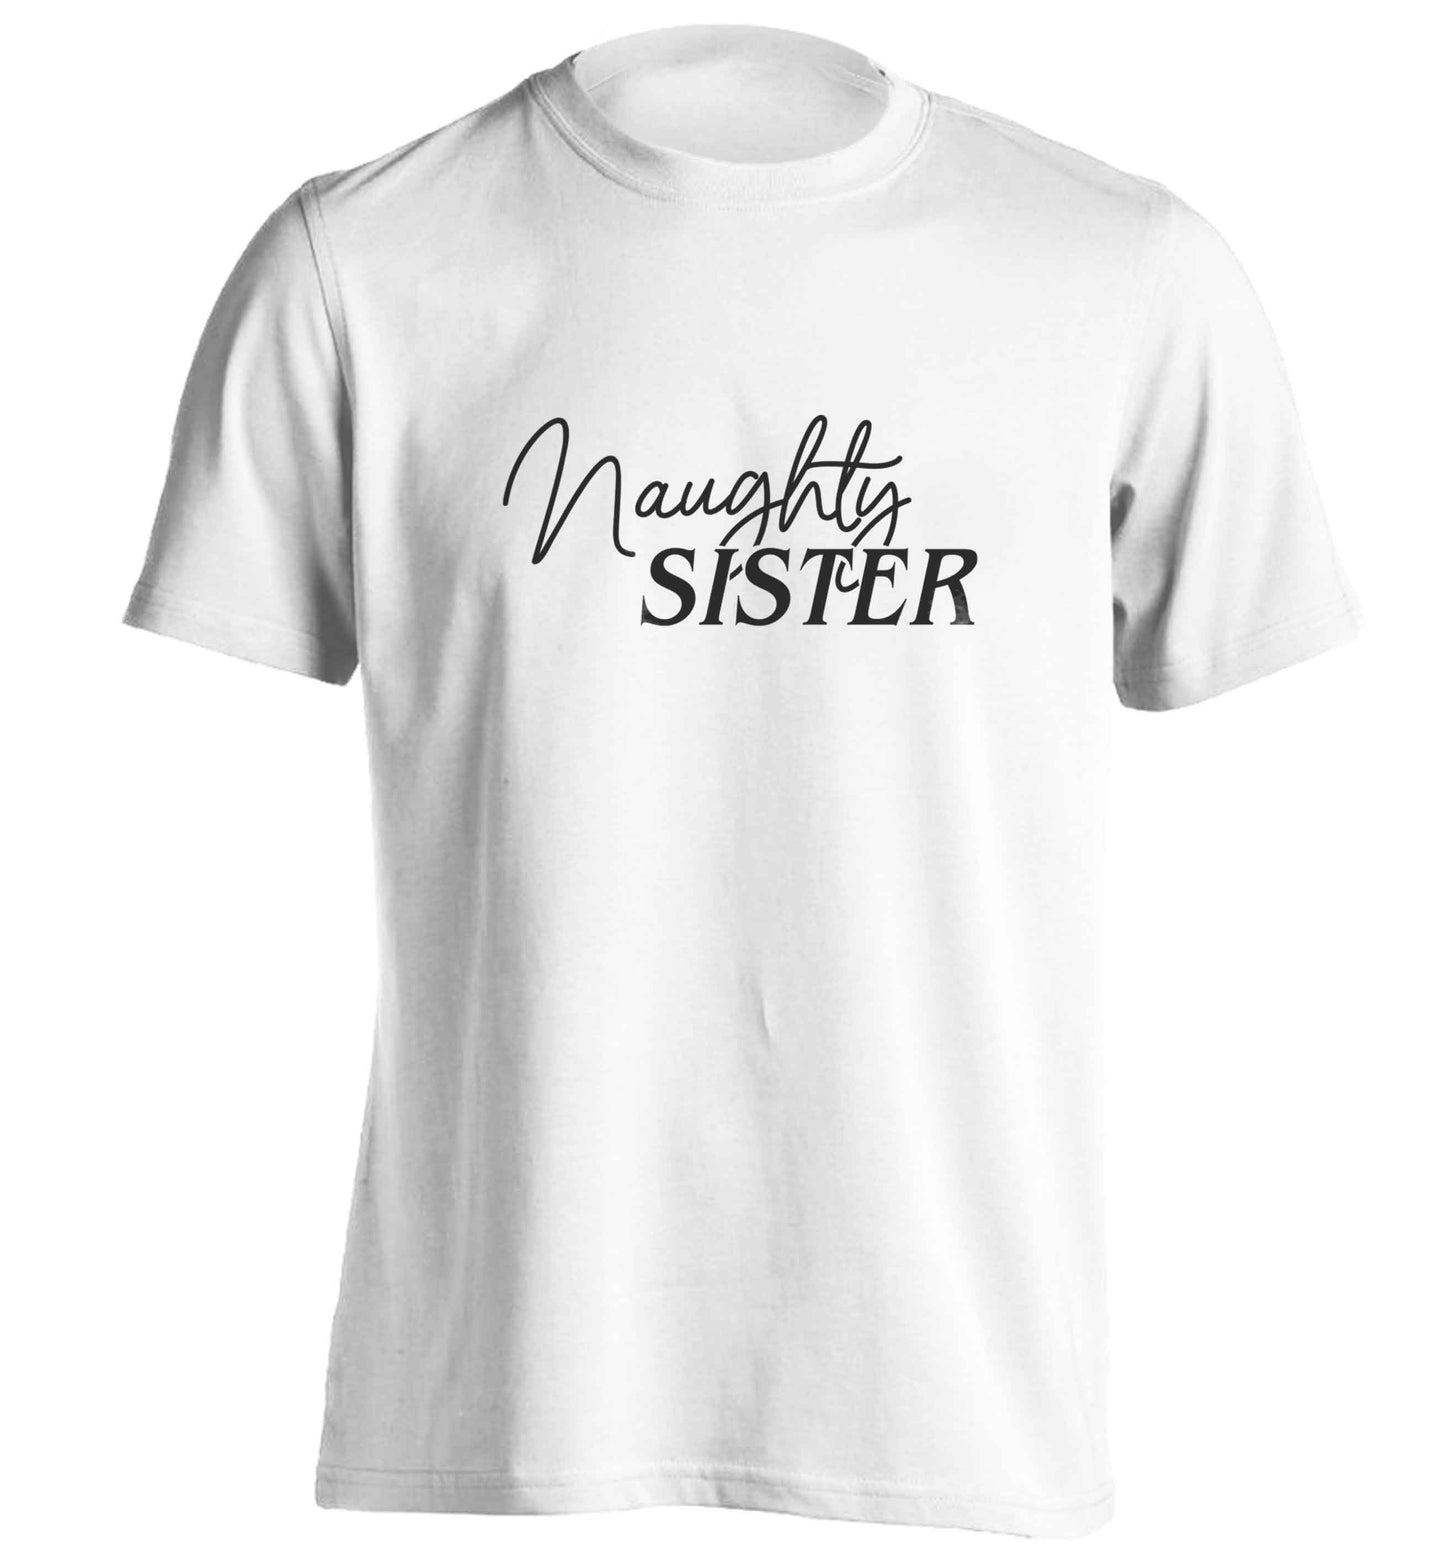 Naughty Sister adults unisex white Tshirt 2XL